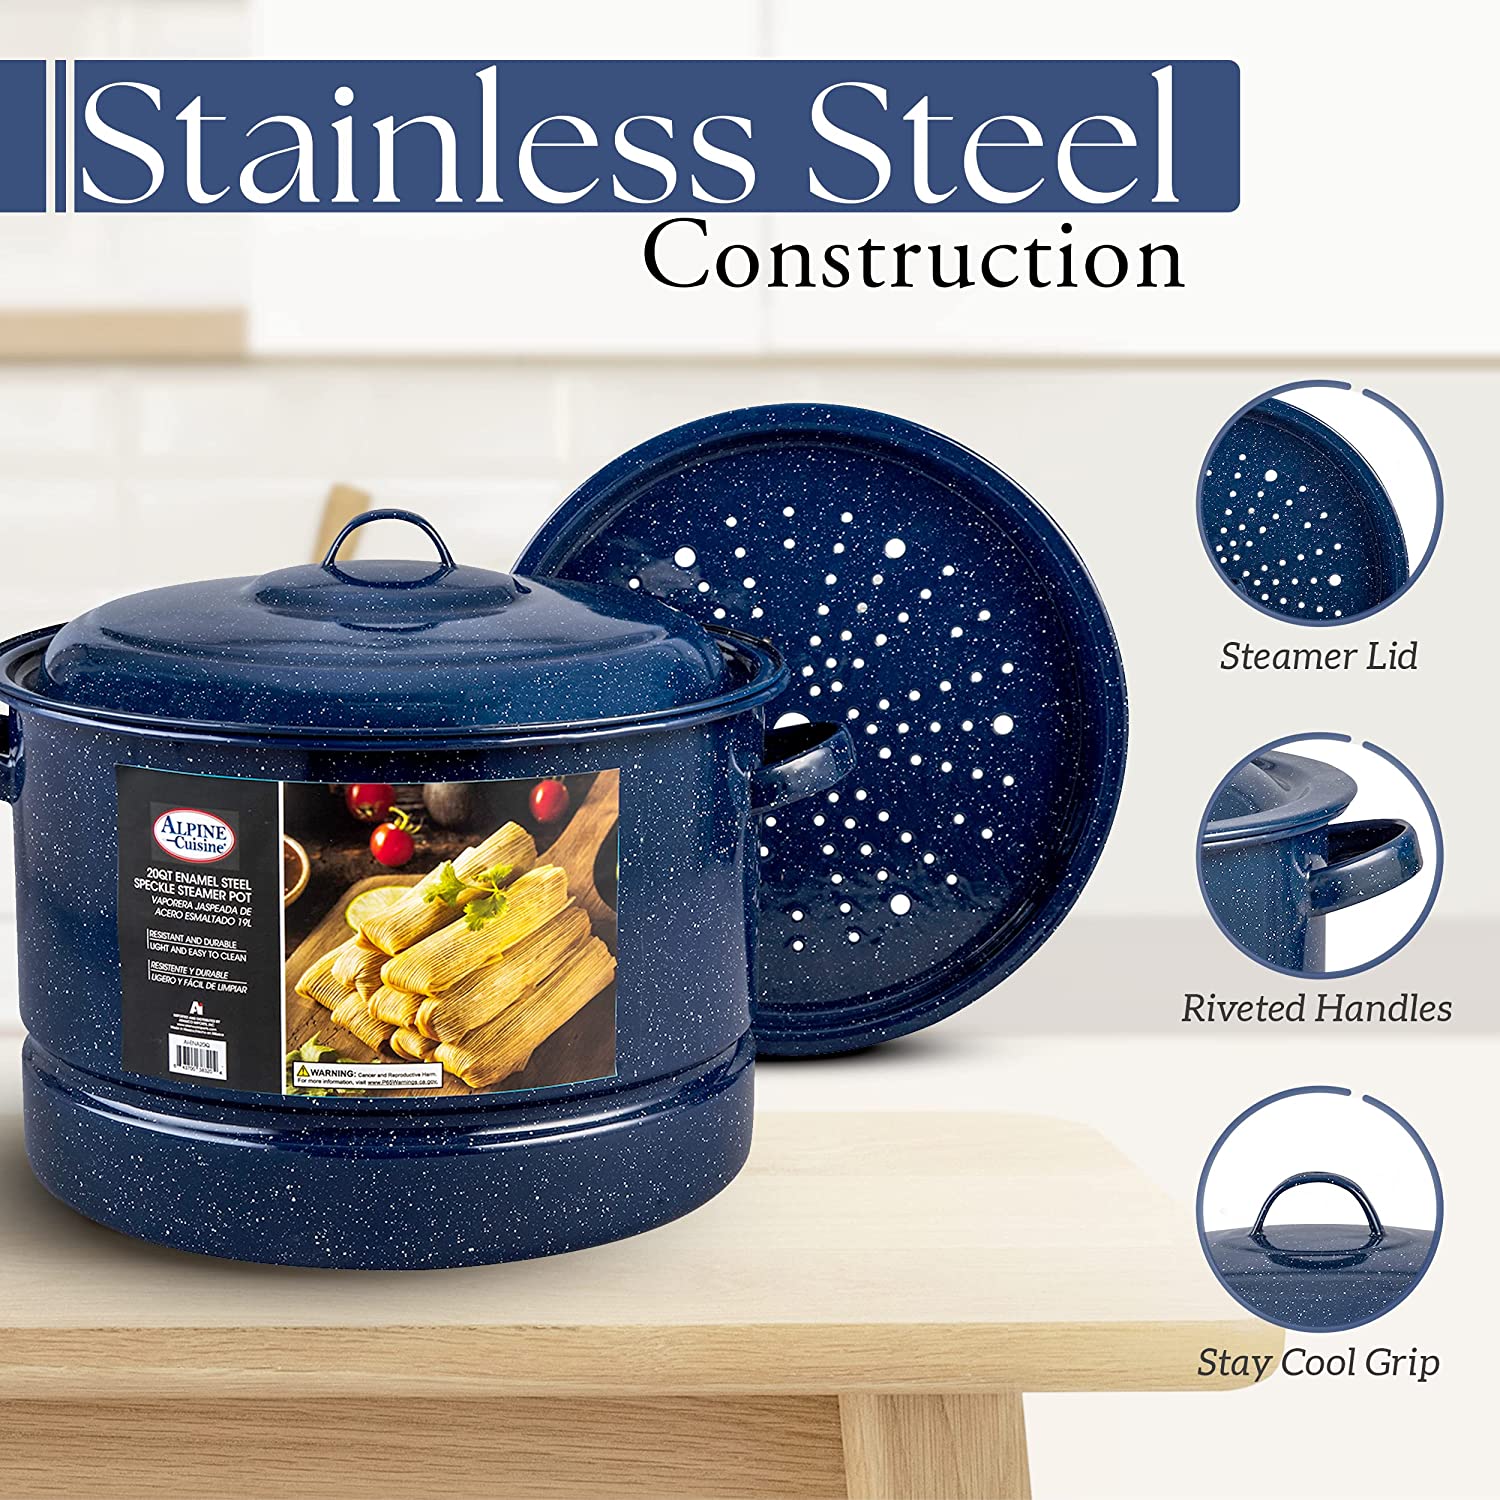 STP Goods 4.8-qt Mint Breeze Enamel on Steel Pot - Green